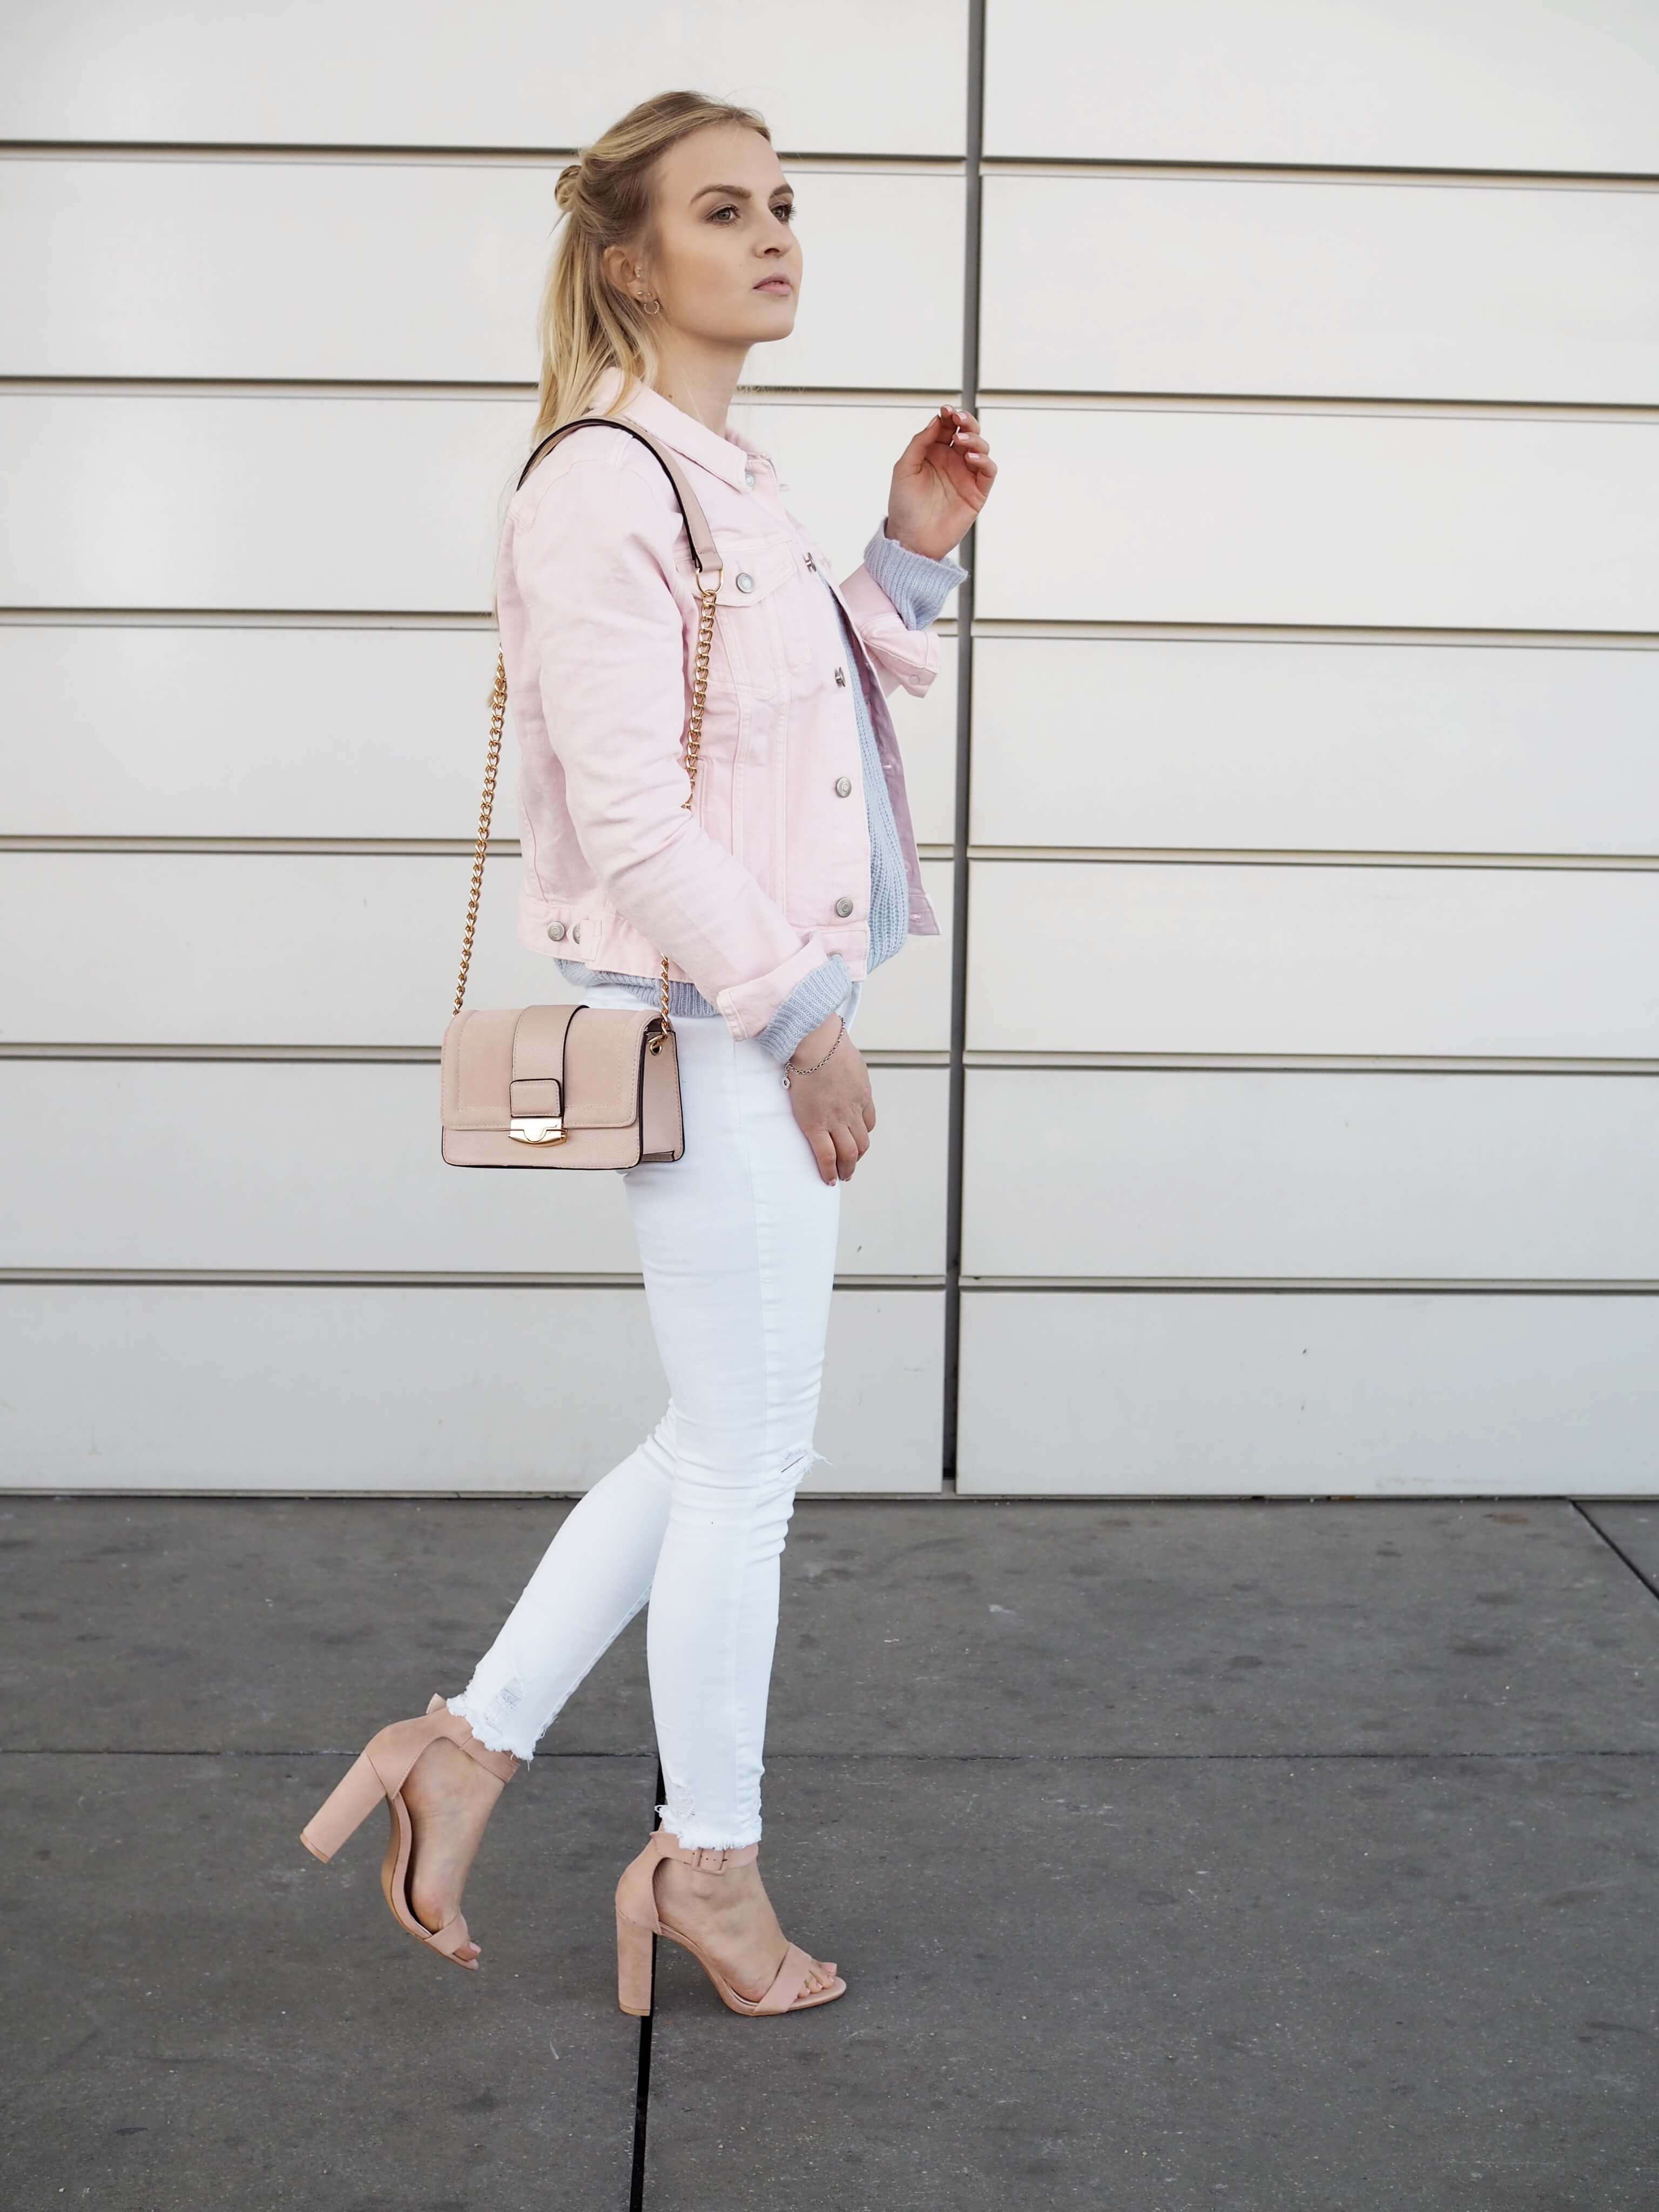 Pastell Outfit Jeansjacke rosa, hellblau, mint, vanille, Pullover, Frühling Blogger Fashionblog Modeblog Katefully Styleseven ootd München